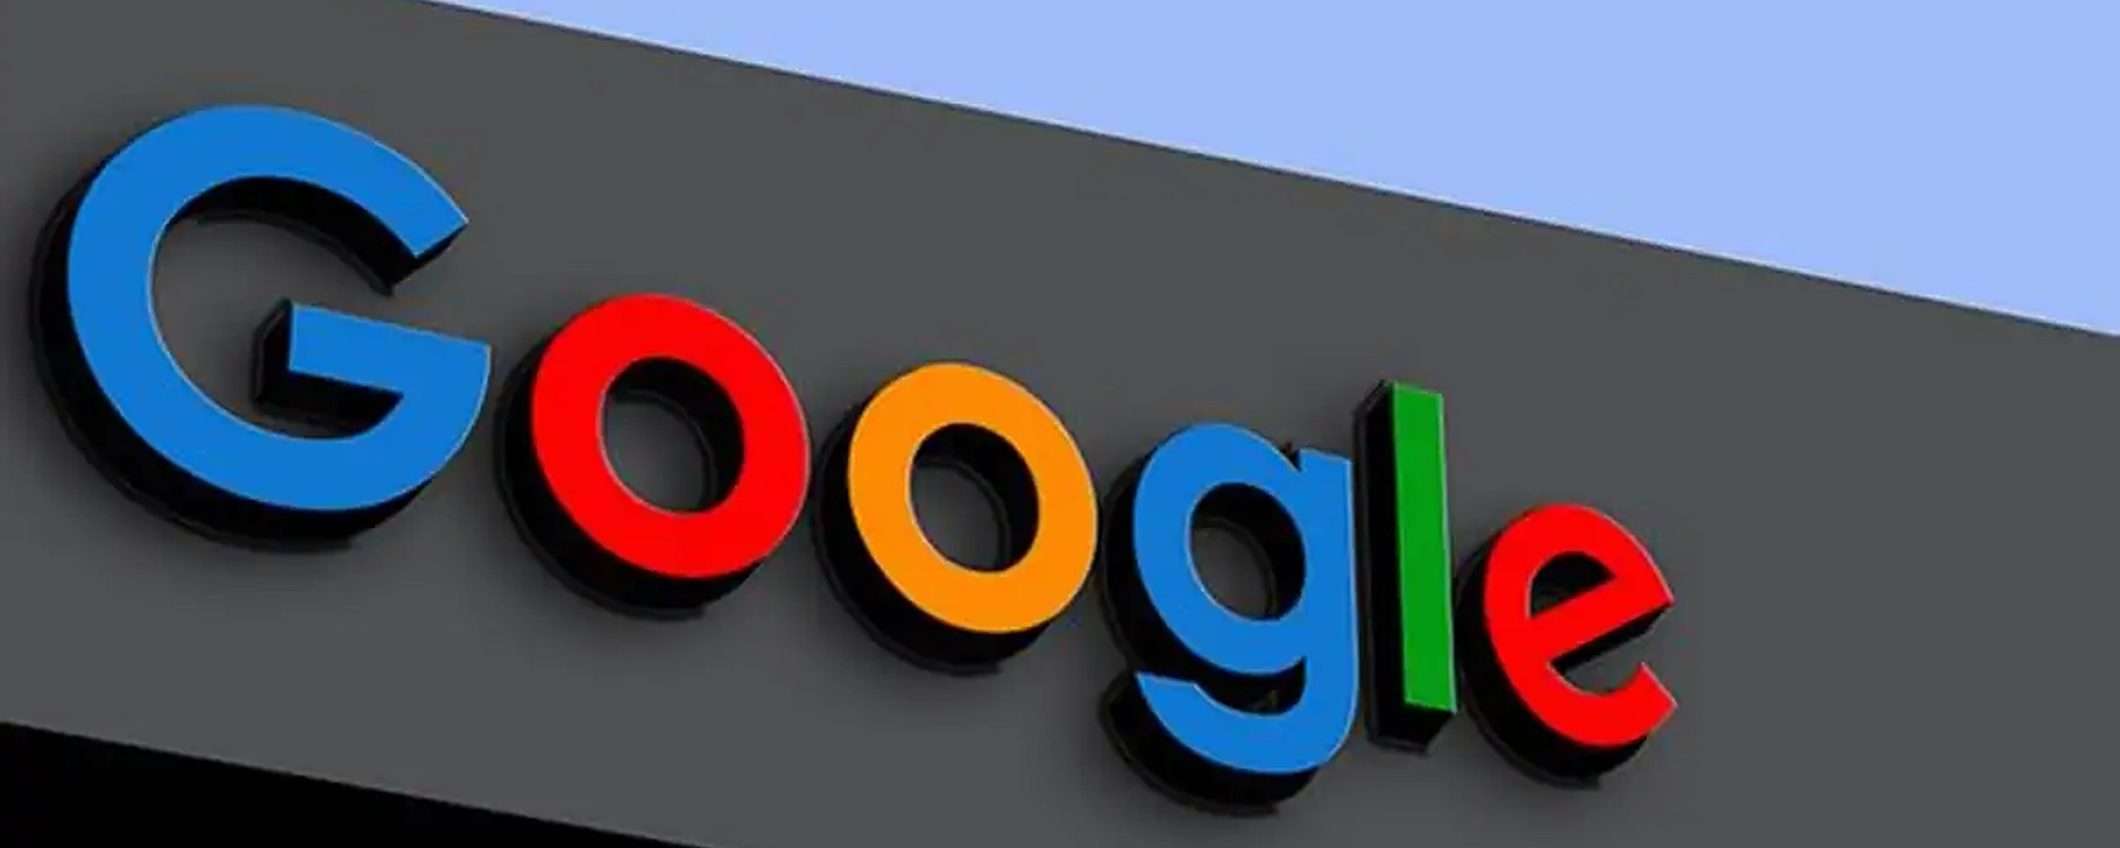 Google: nuove indagini antitrust in Giappone